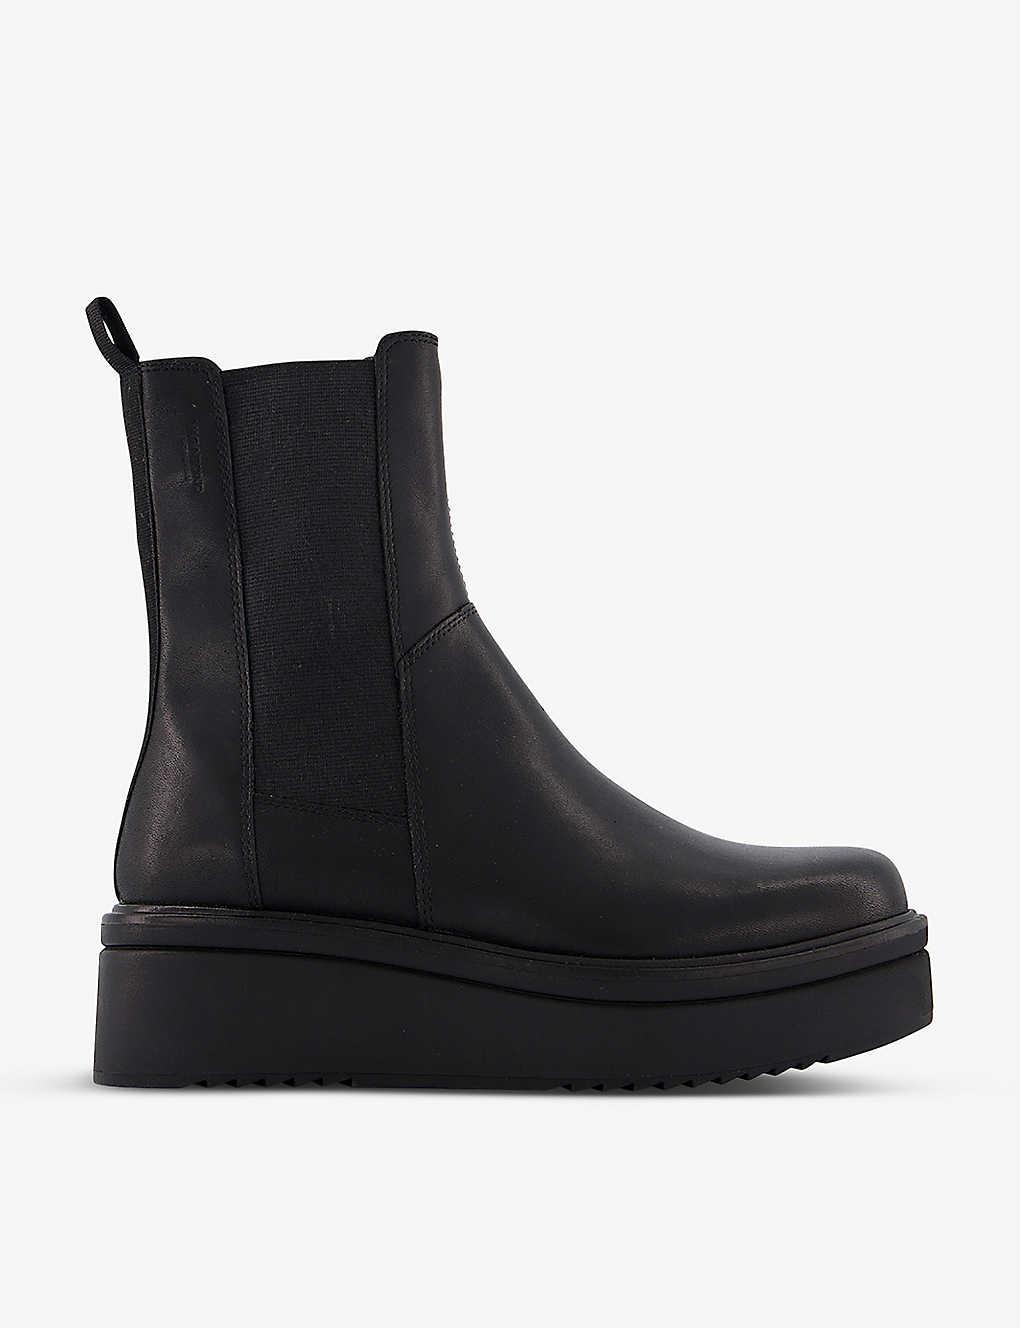 Vagabond Tara Leather Chelsea Boots in Black - Lyst